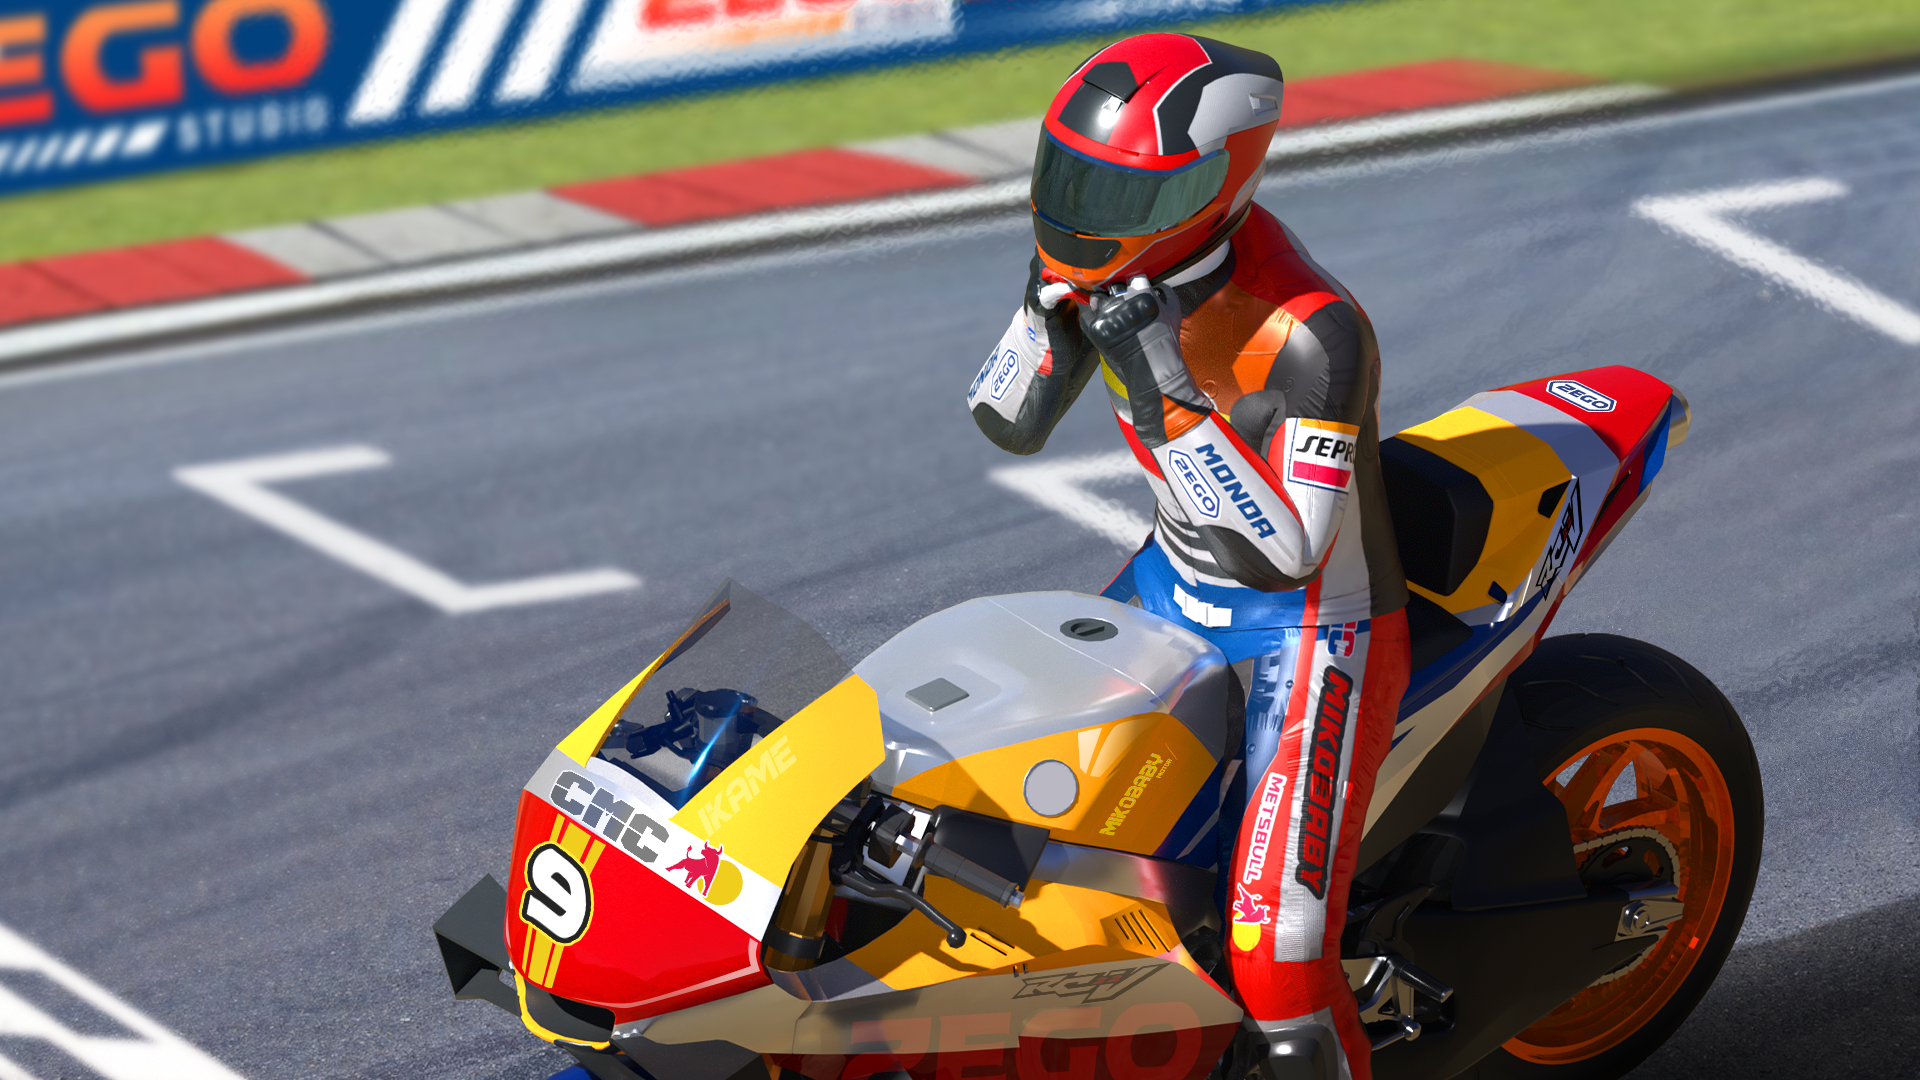 Moto Rider, Bike Racing Game screenshot game